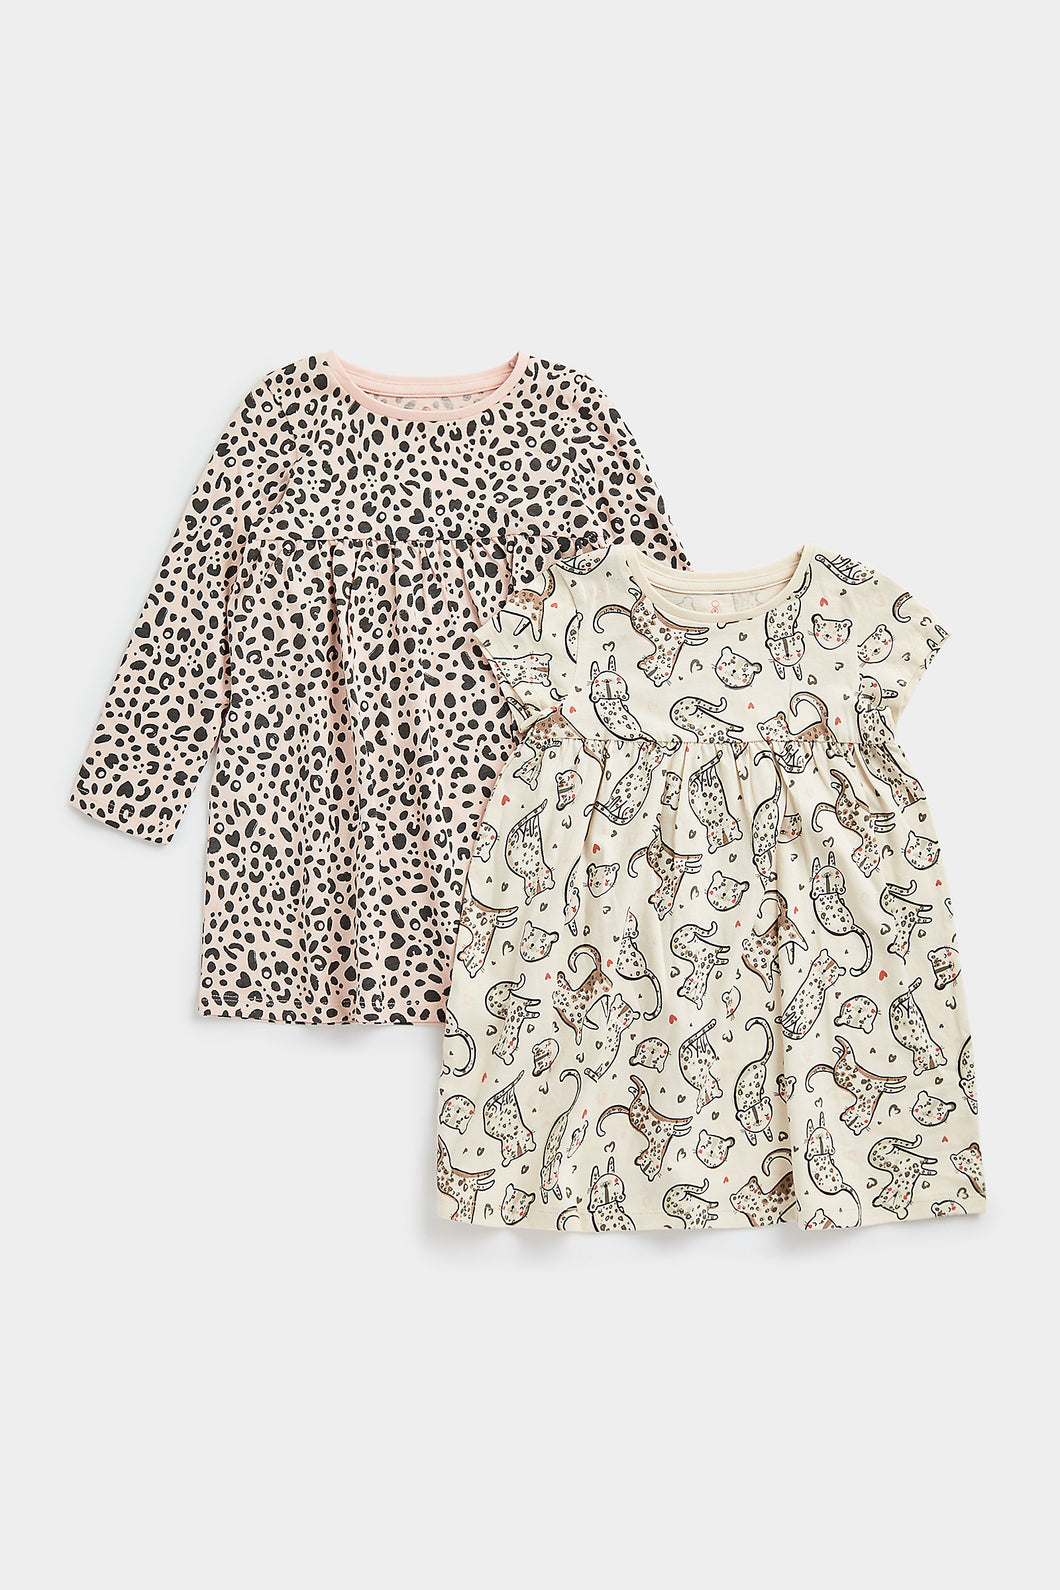 Mothercare Little Leopard Jersey Dresses - 2 Pack